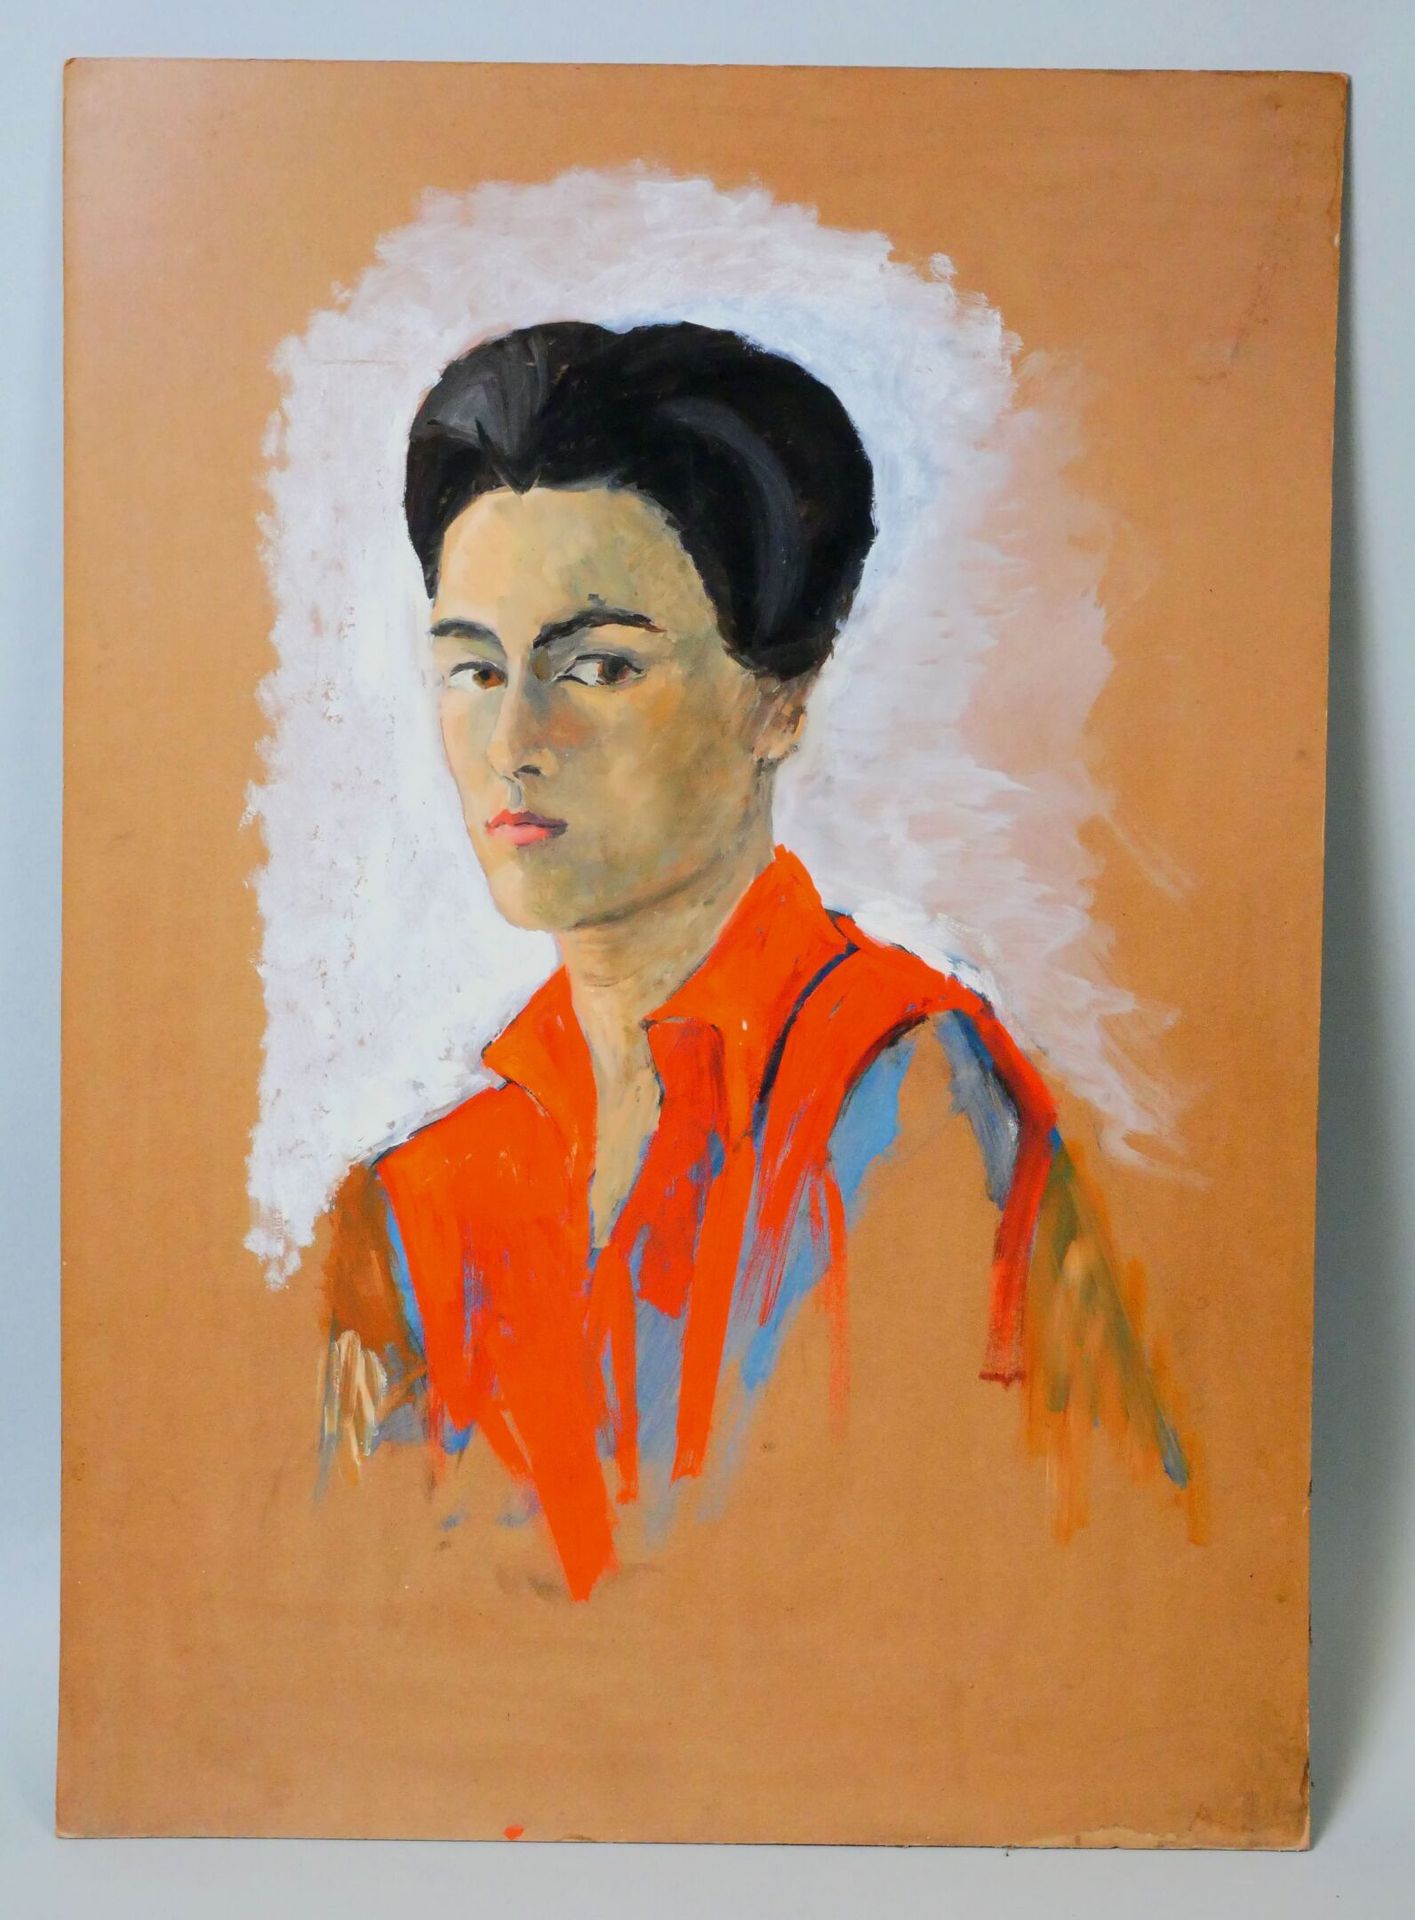 Null 妮可-马利特(1931-2021)
穿红衬衫的自画像
纸板上的油画，无签名
尺寸：72 x 51 厘米

拍卖会将于2023年2月10日星期五在巴黎第&hellip;